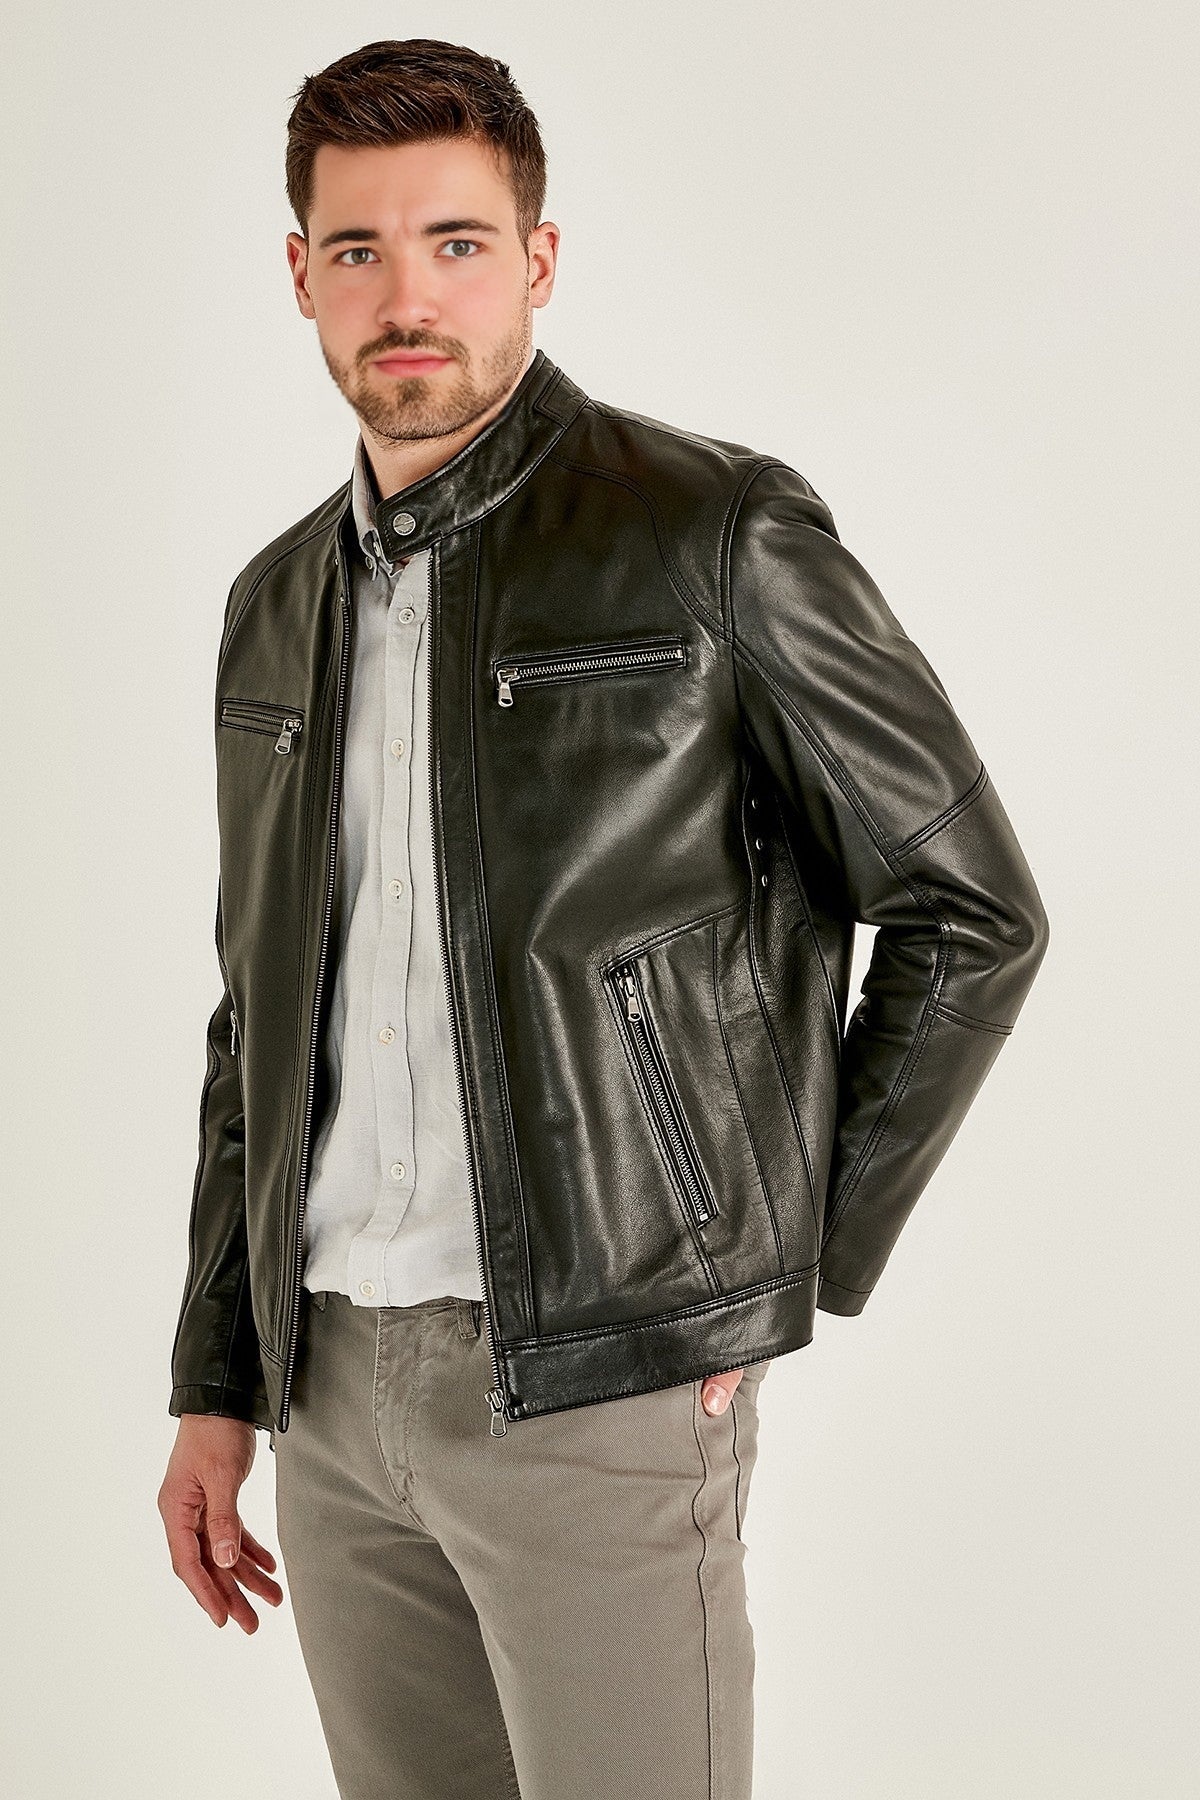 Alanzo Men's Black Leather Jacket